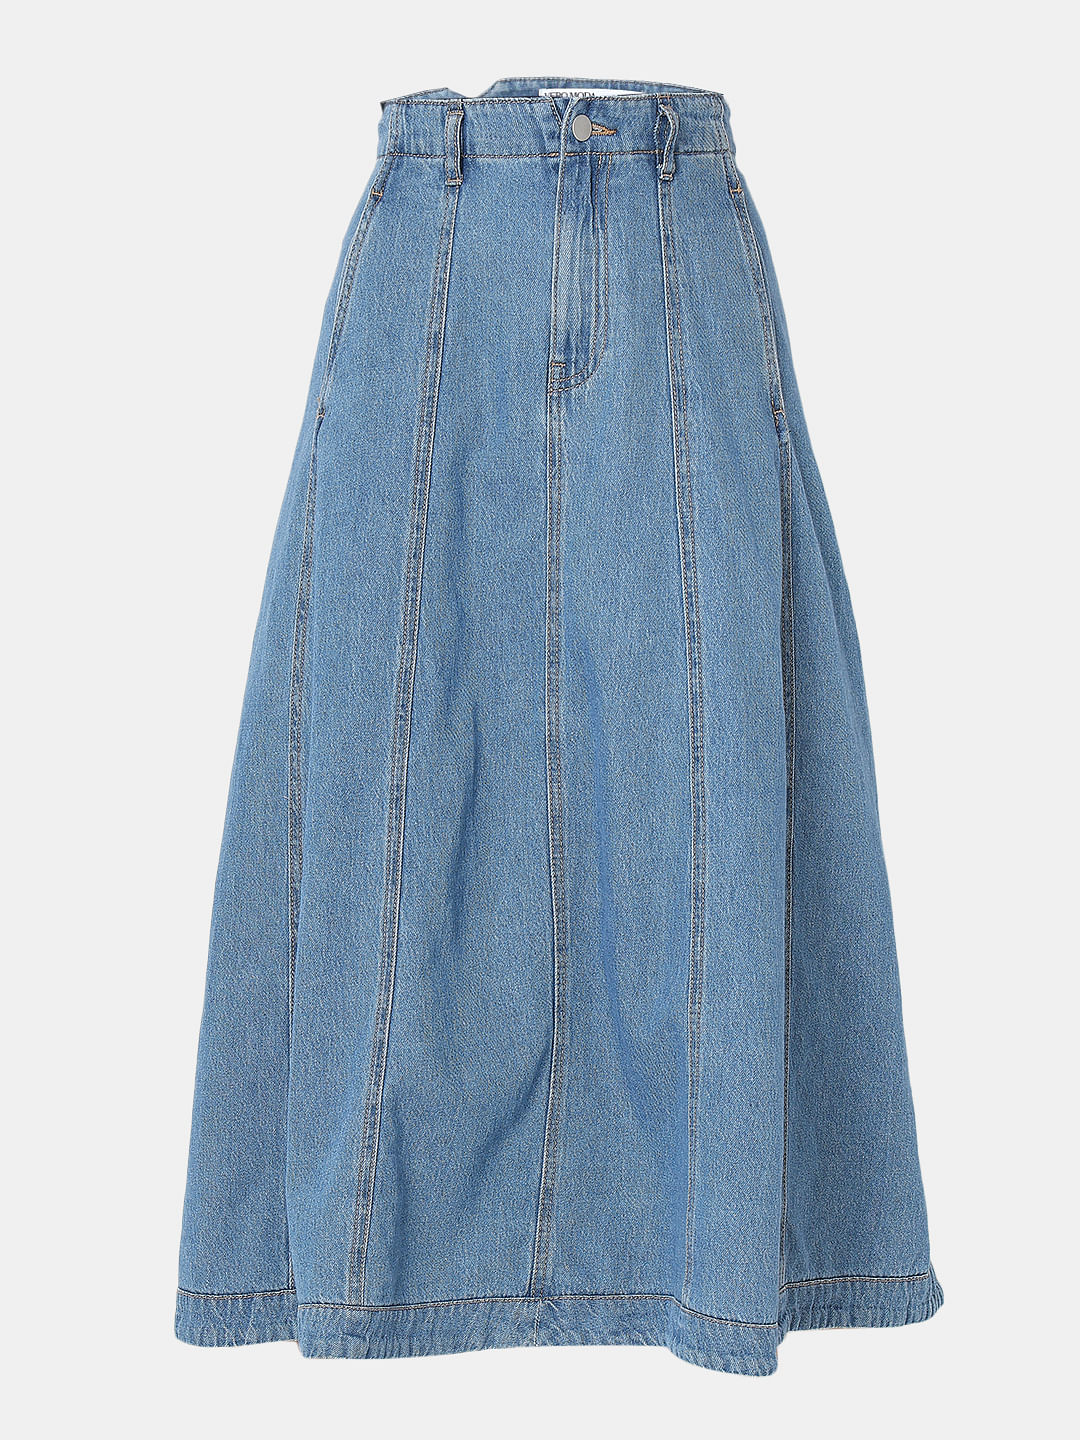 Haven' Long Denim Skirt in Medium Wash FINAL SALE – The Main Street Exchange